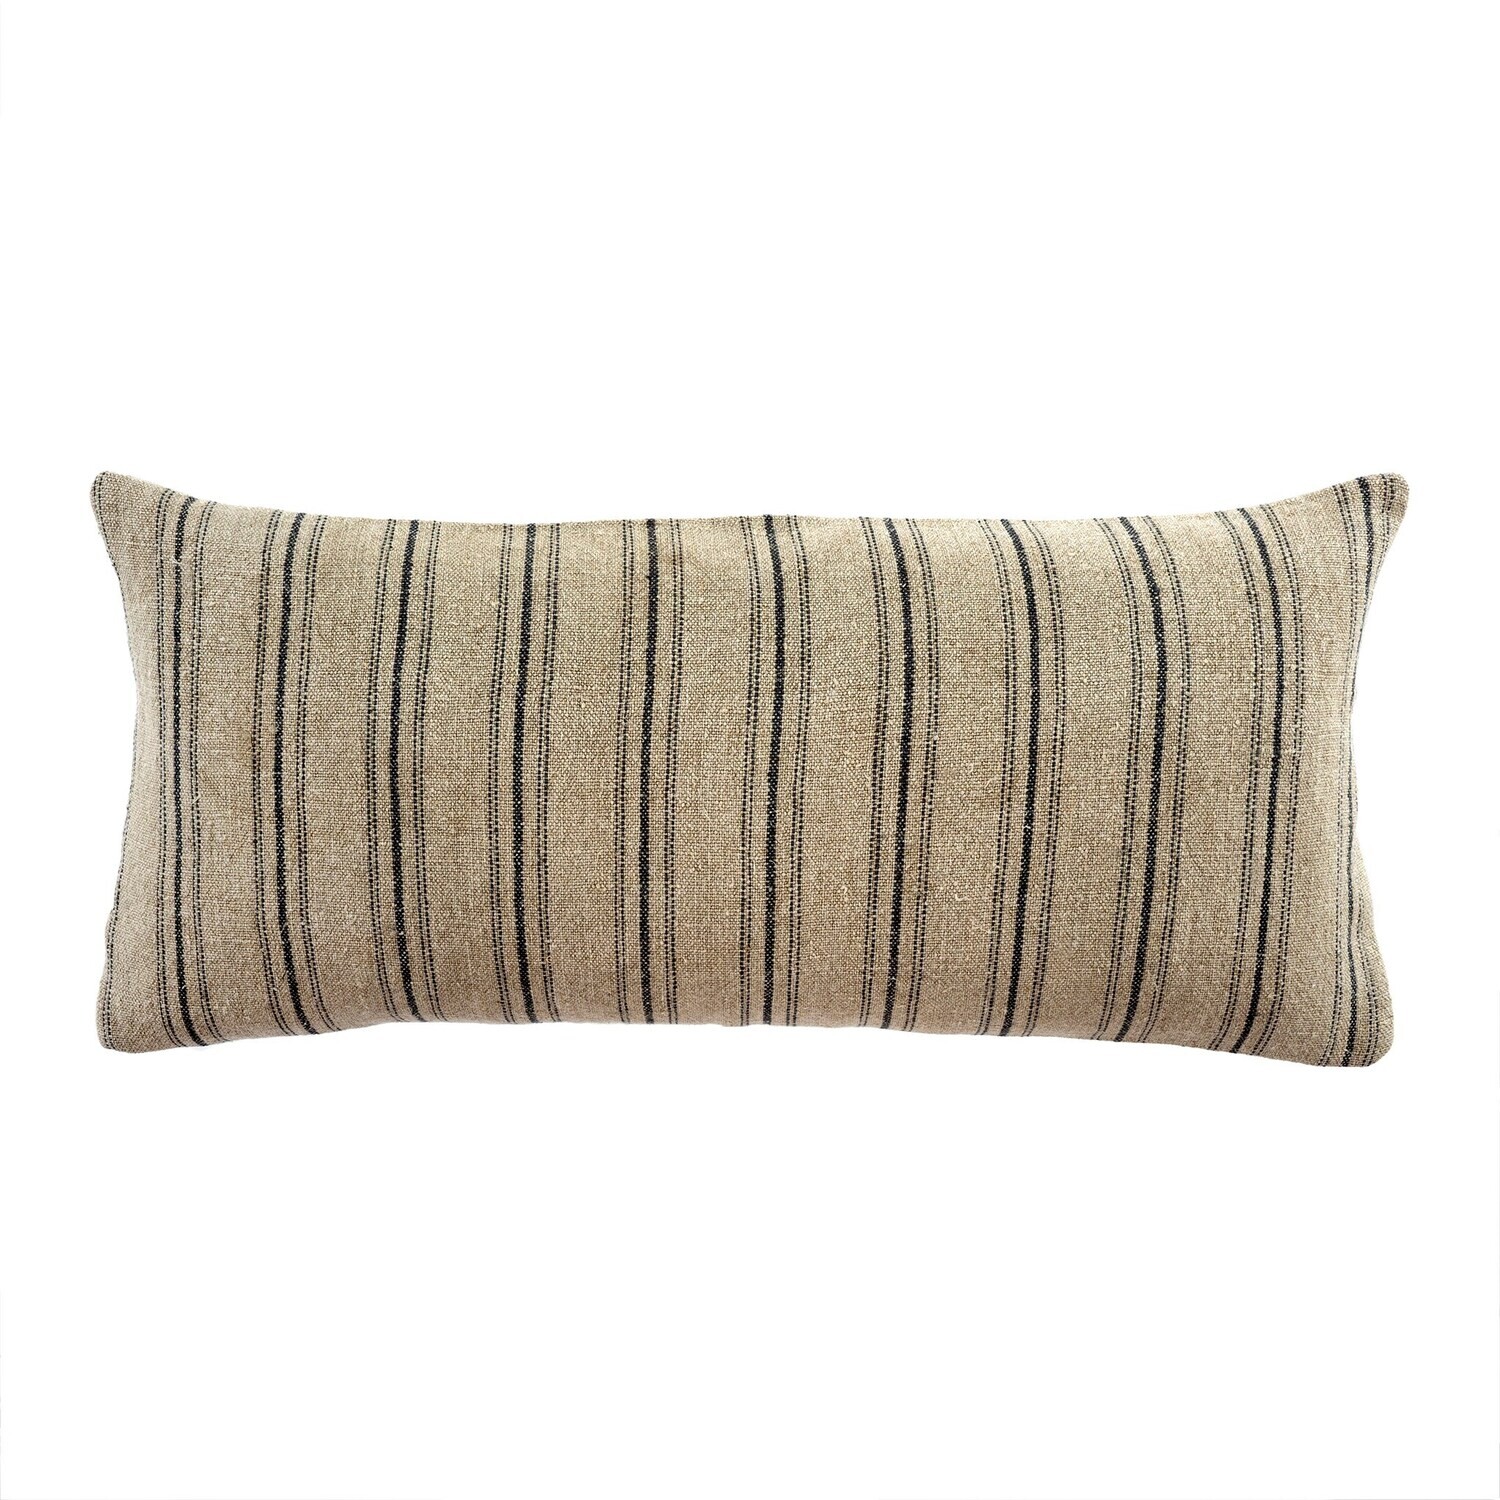 Indaba Juniper Linen Lumbar Pillow 15x32